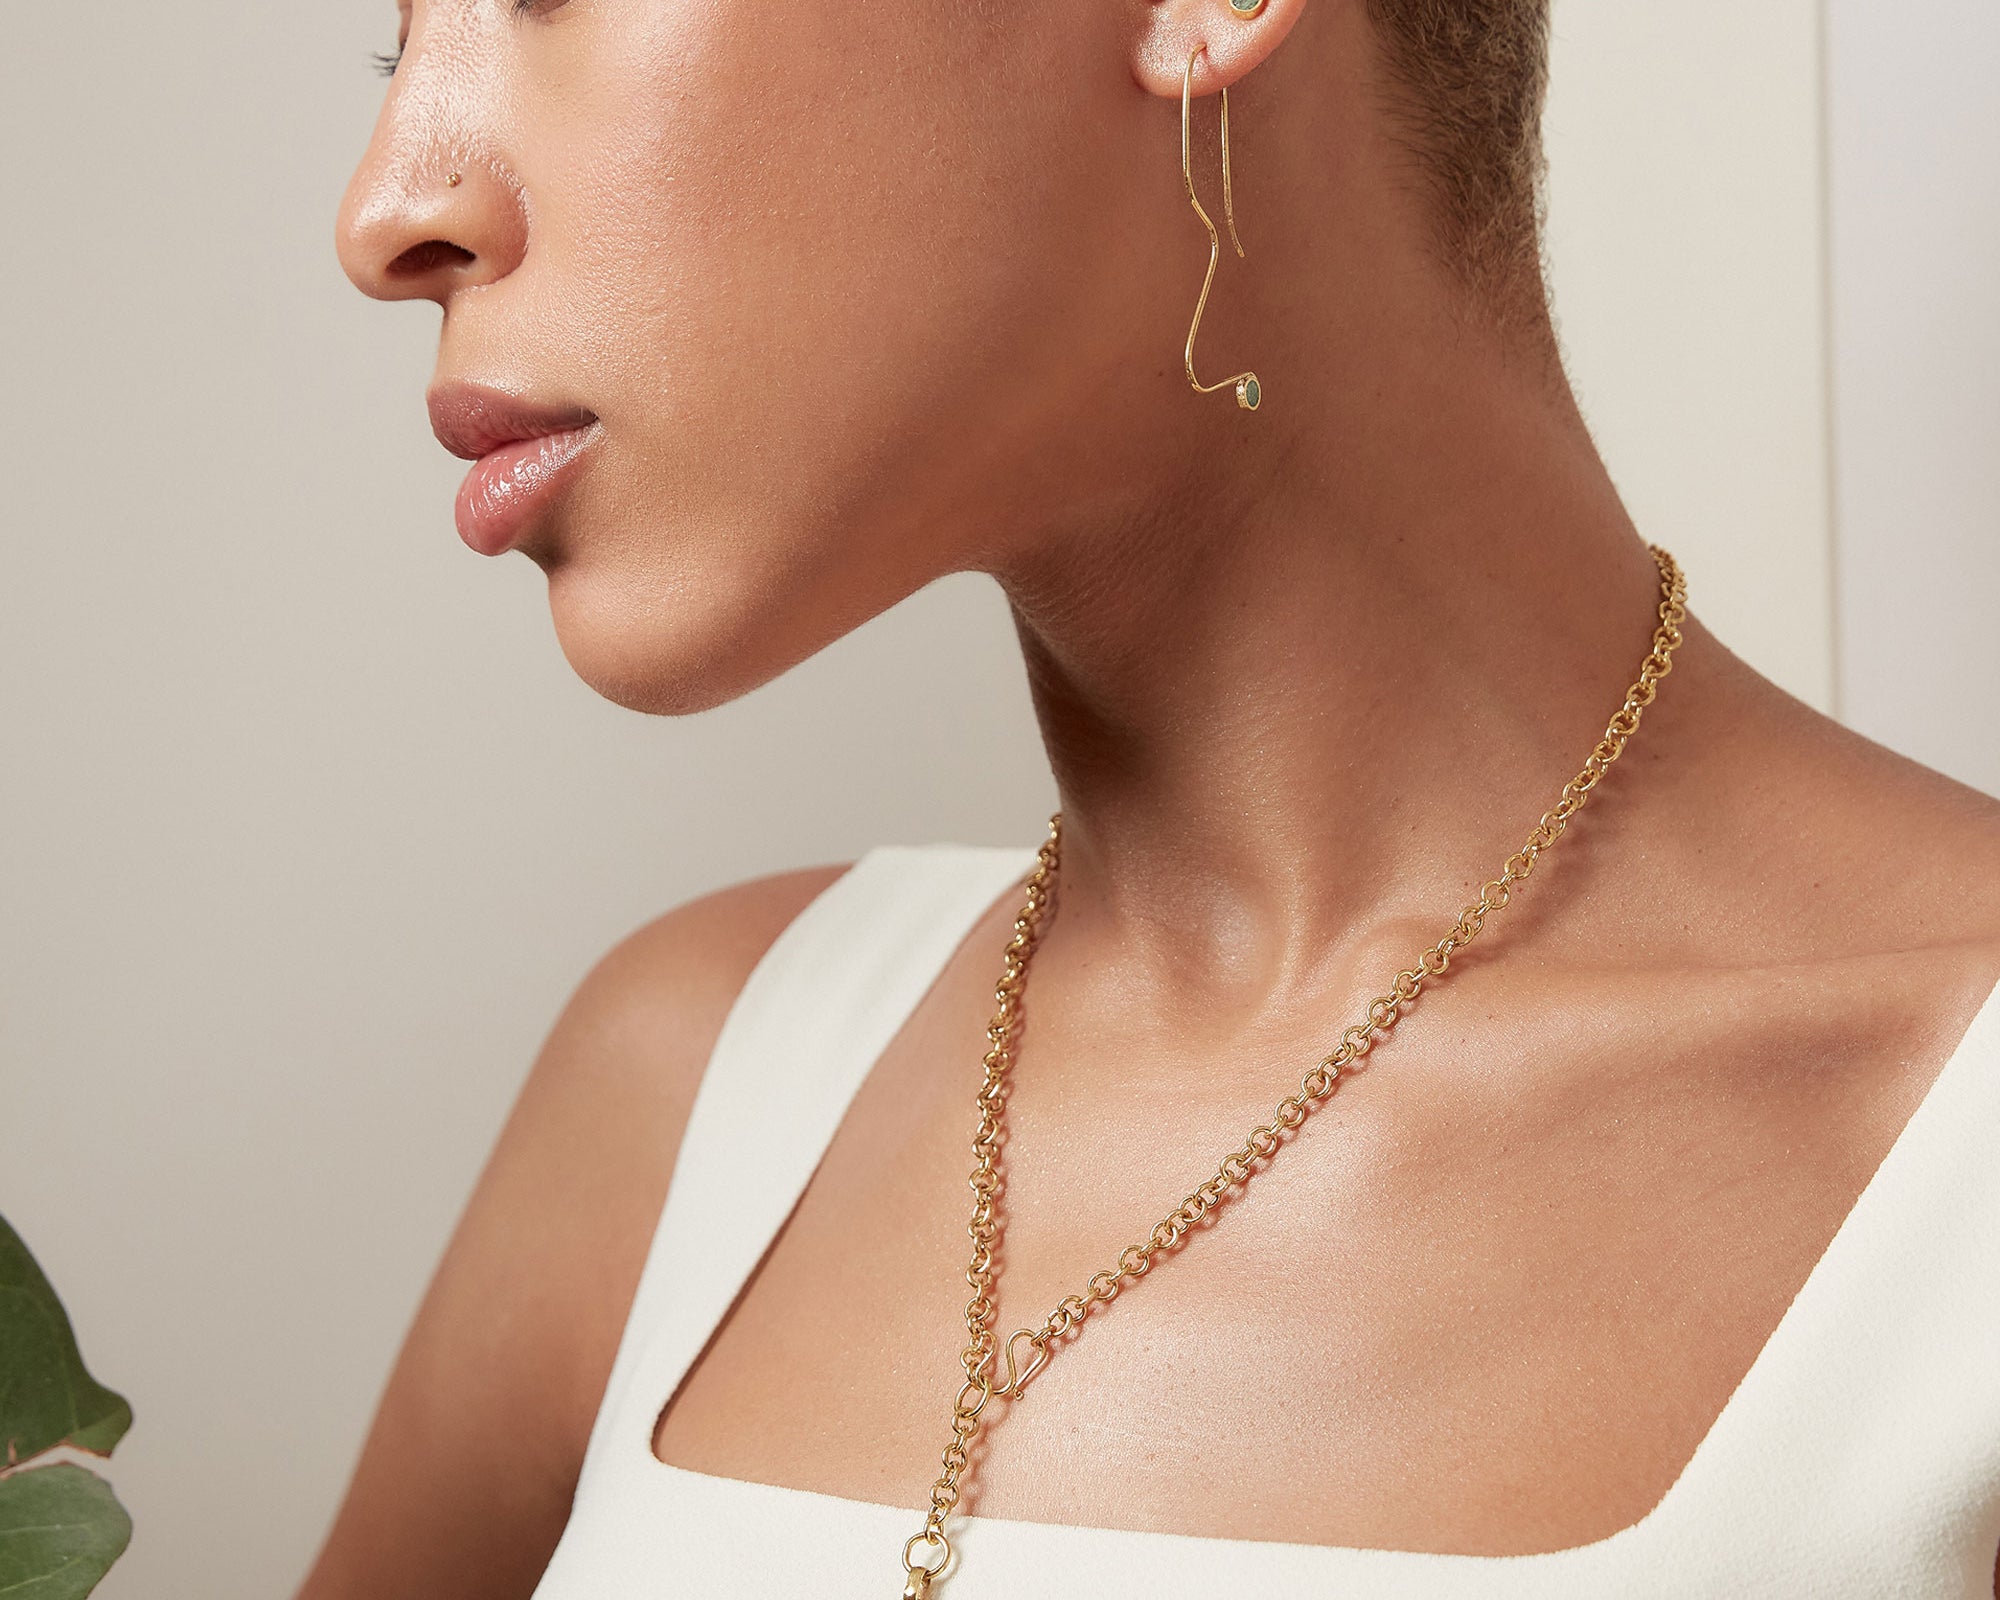 Nila Chrysocolla Squiggle Stud Earrings | Sustainable Jewellery by Ottoman Hands